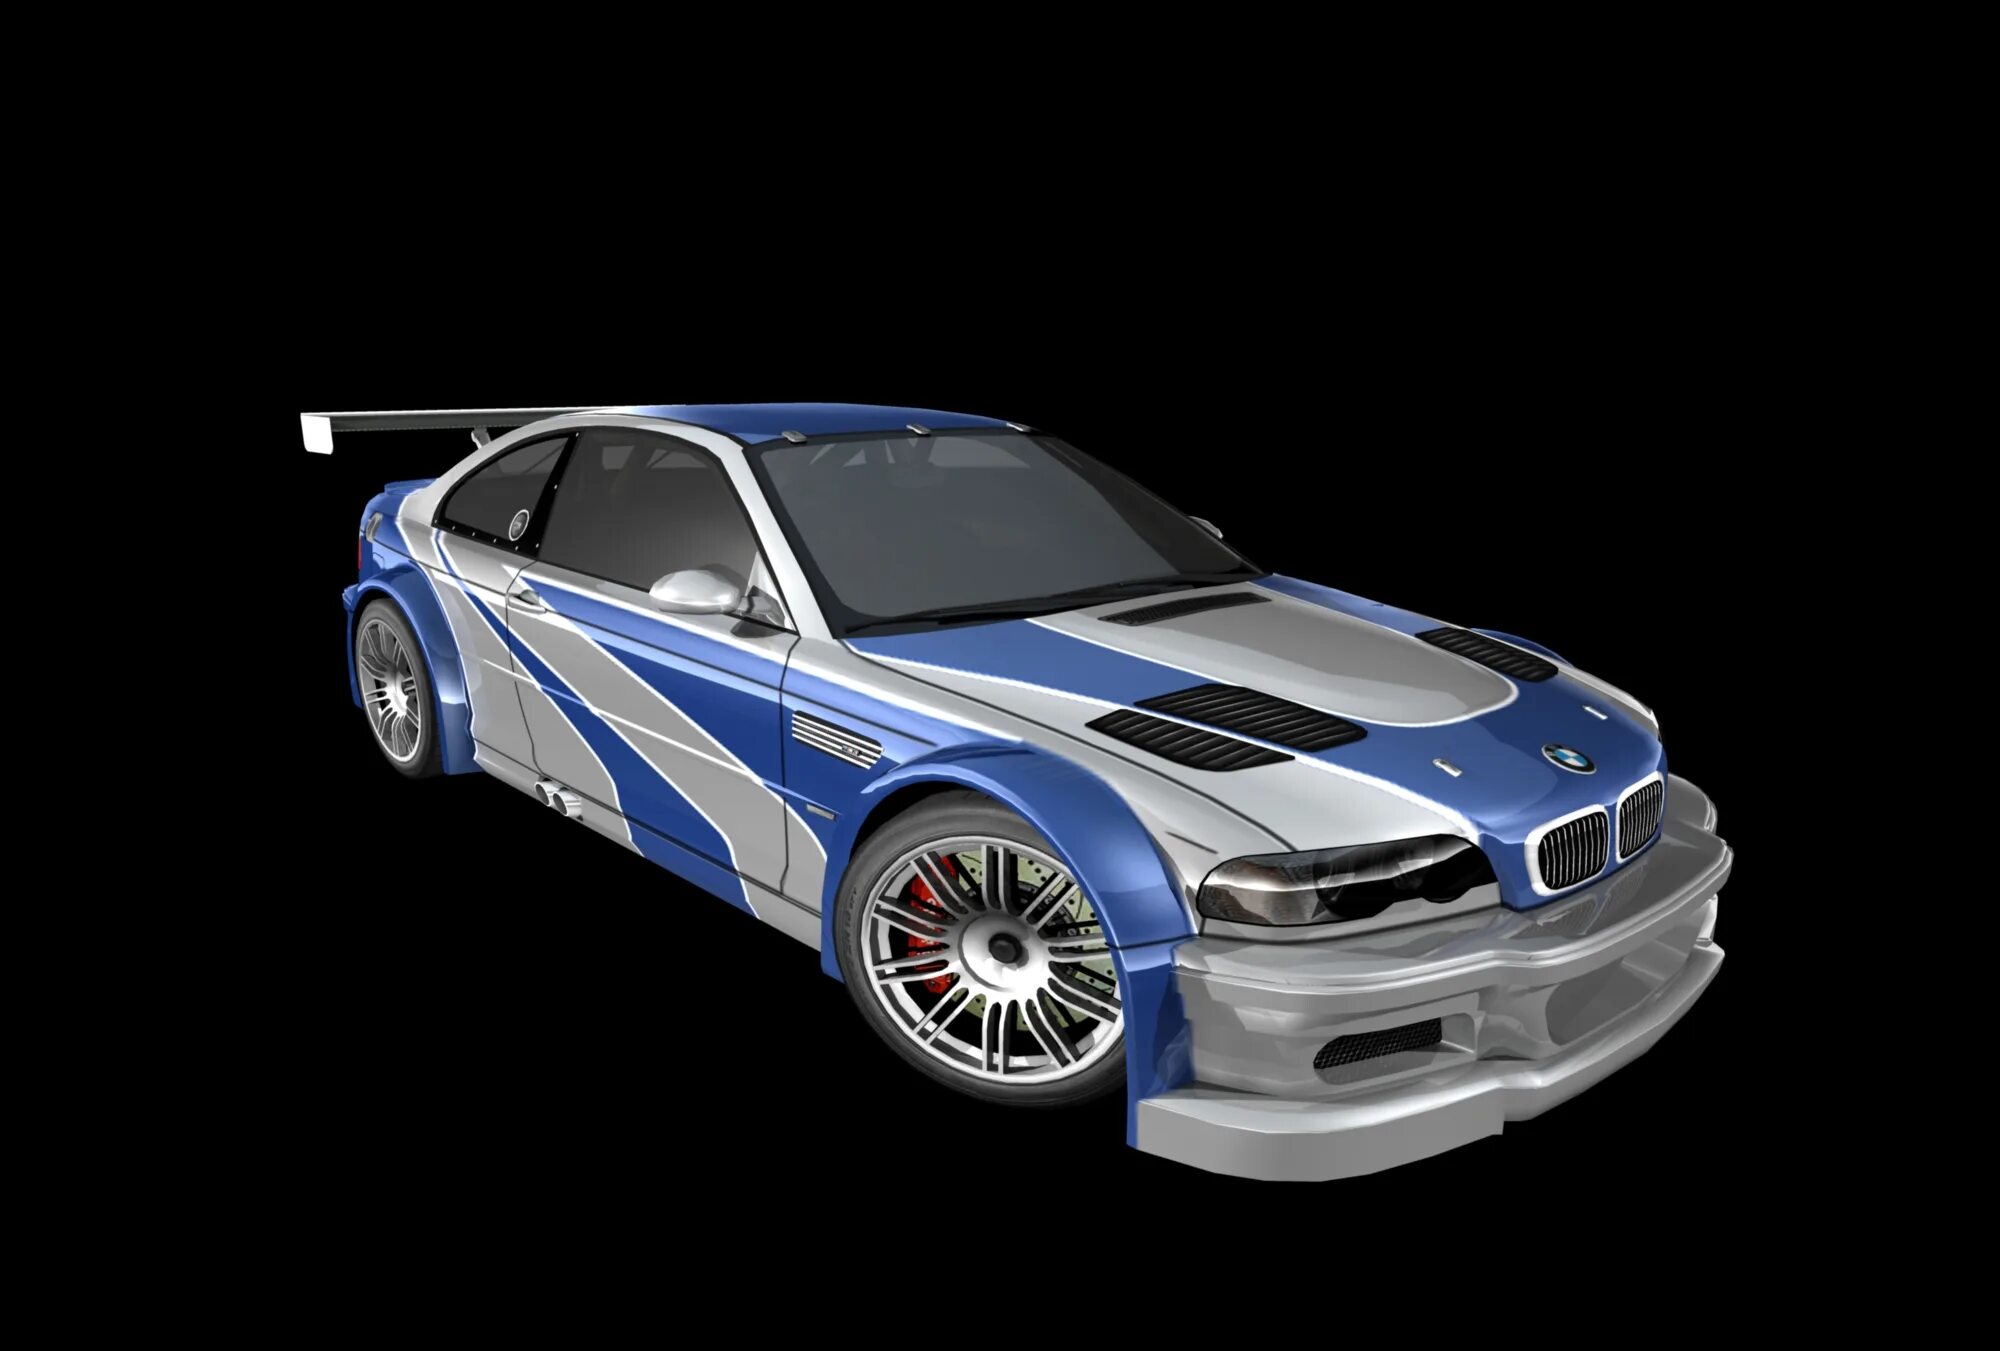 Bmw m3 nfs mw. BMW m3 GTR. BMW m3 e46 GTR. BMW m3 GTR 2001. BMW m3 e46 GTR Razor.